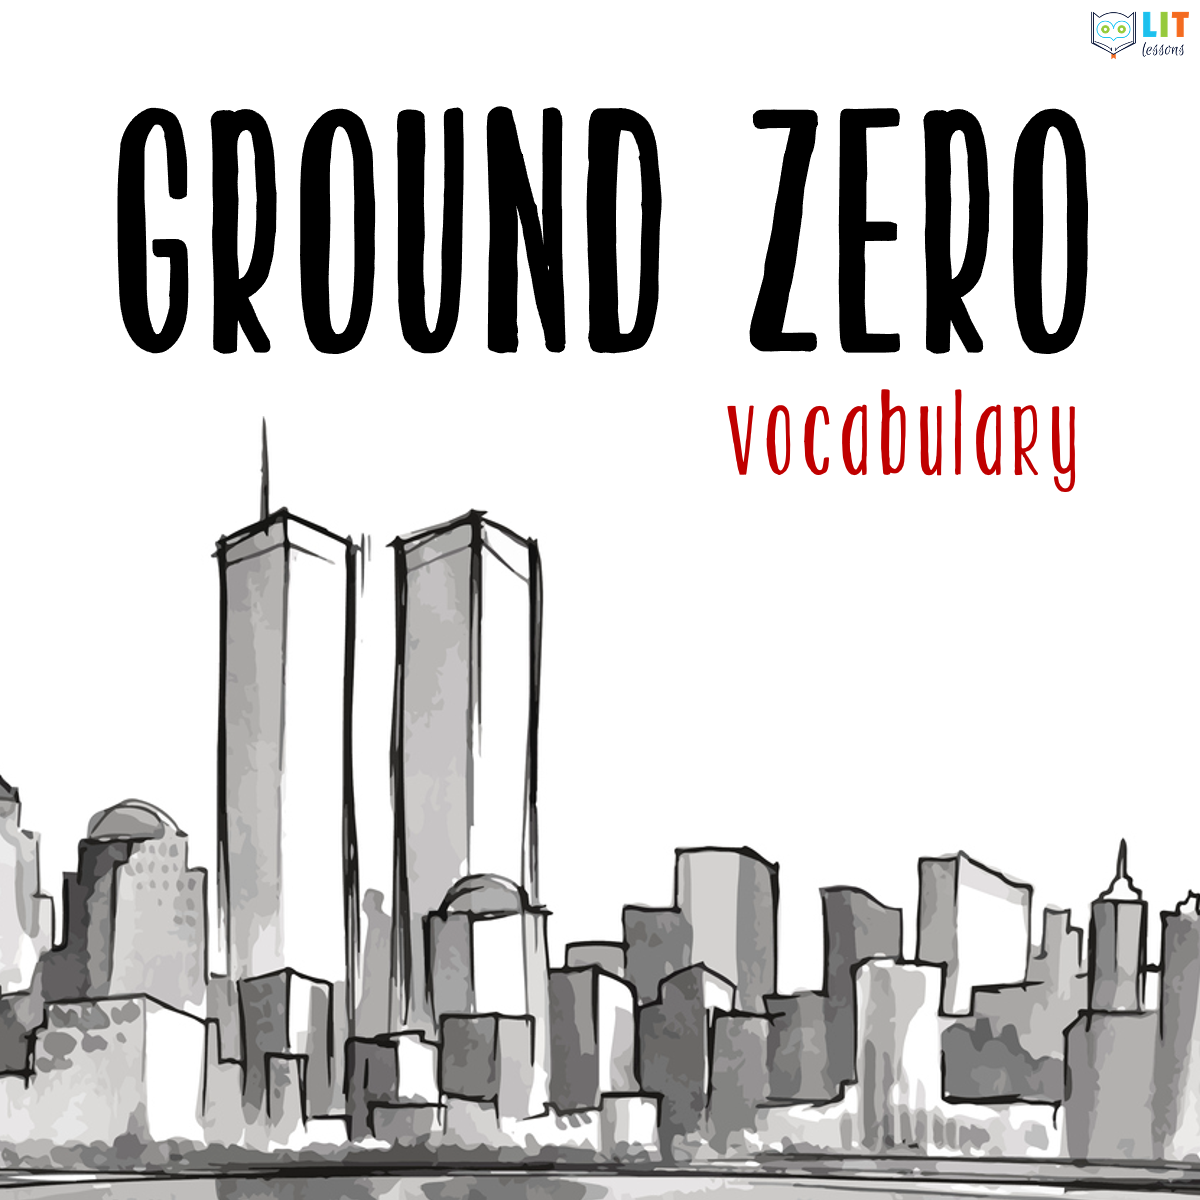 Ground Zero Vocabulary